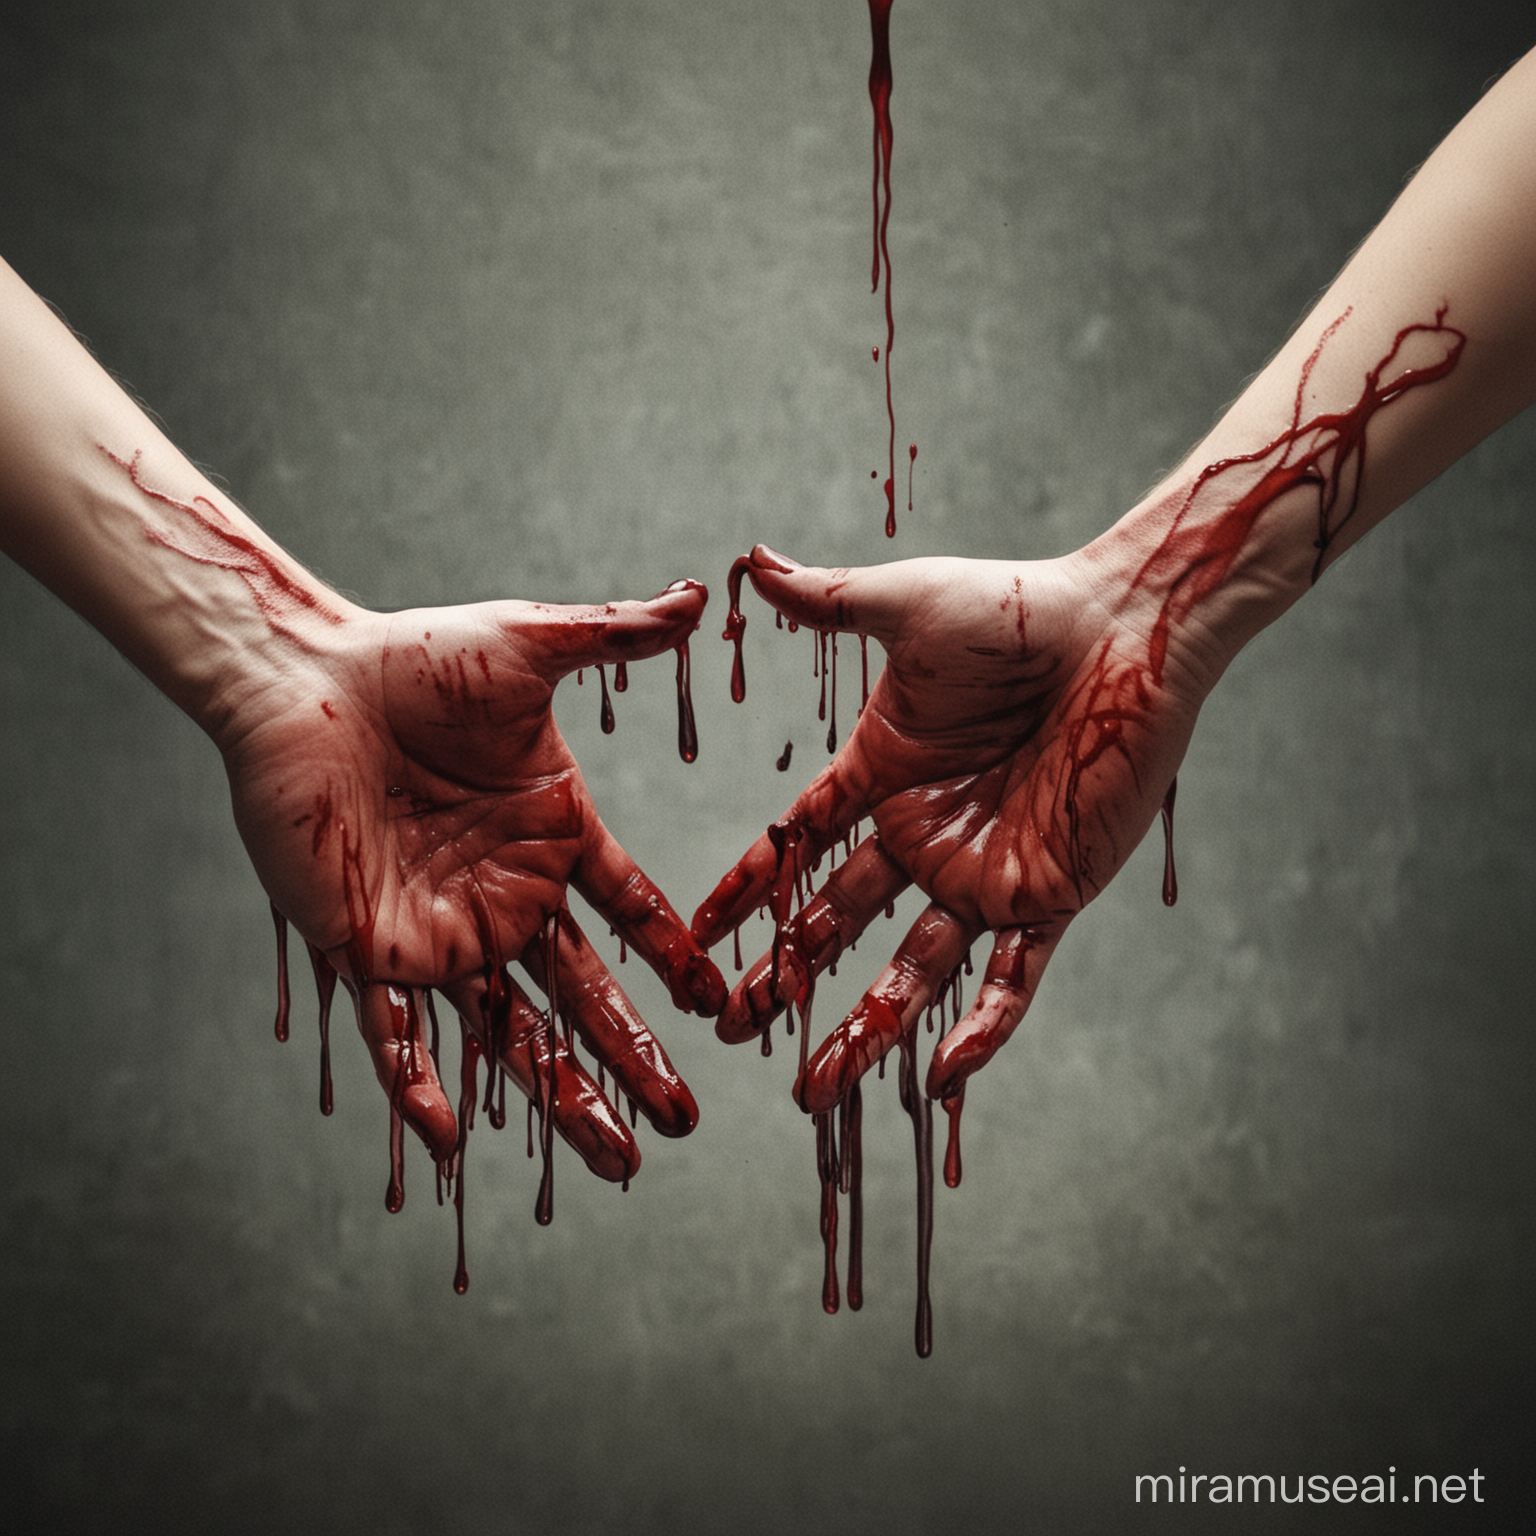 Hands in blood